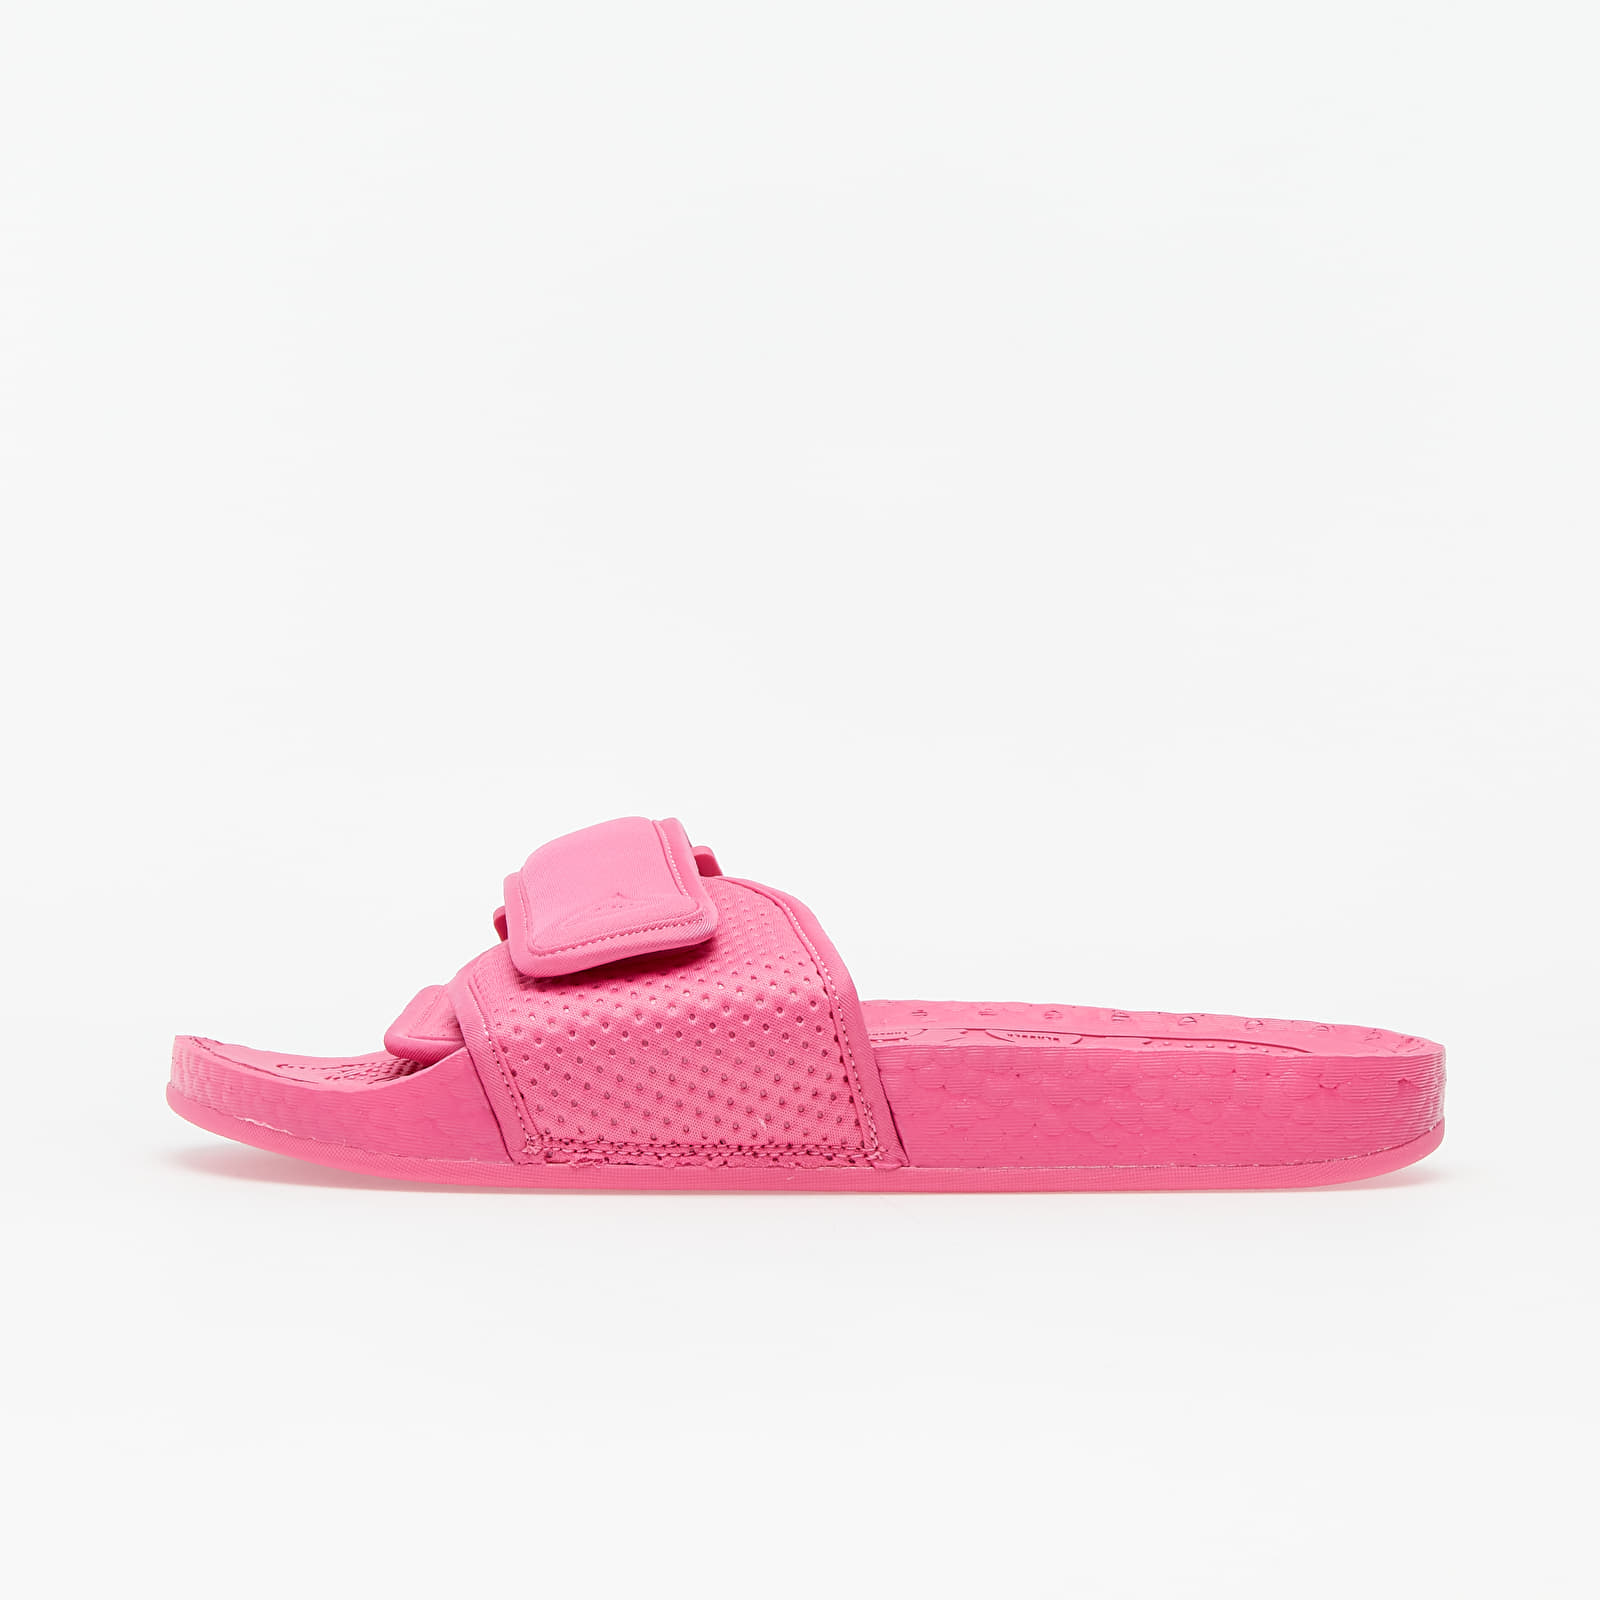 Herren Sneaker und Schuhe adidas x Pharrell Williams Chancletas Hu Semi Solar Pink/ Semi Solar Pink/ Semi Solar Pink